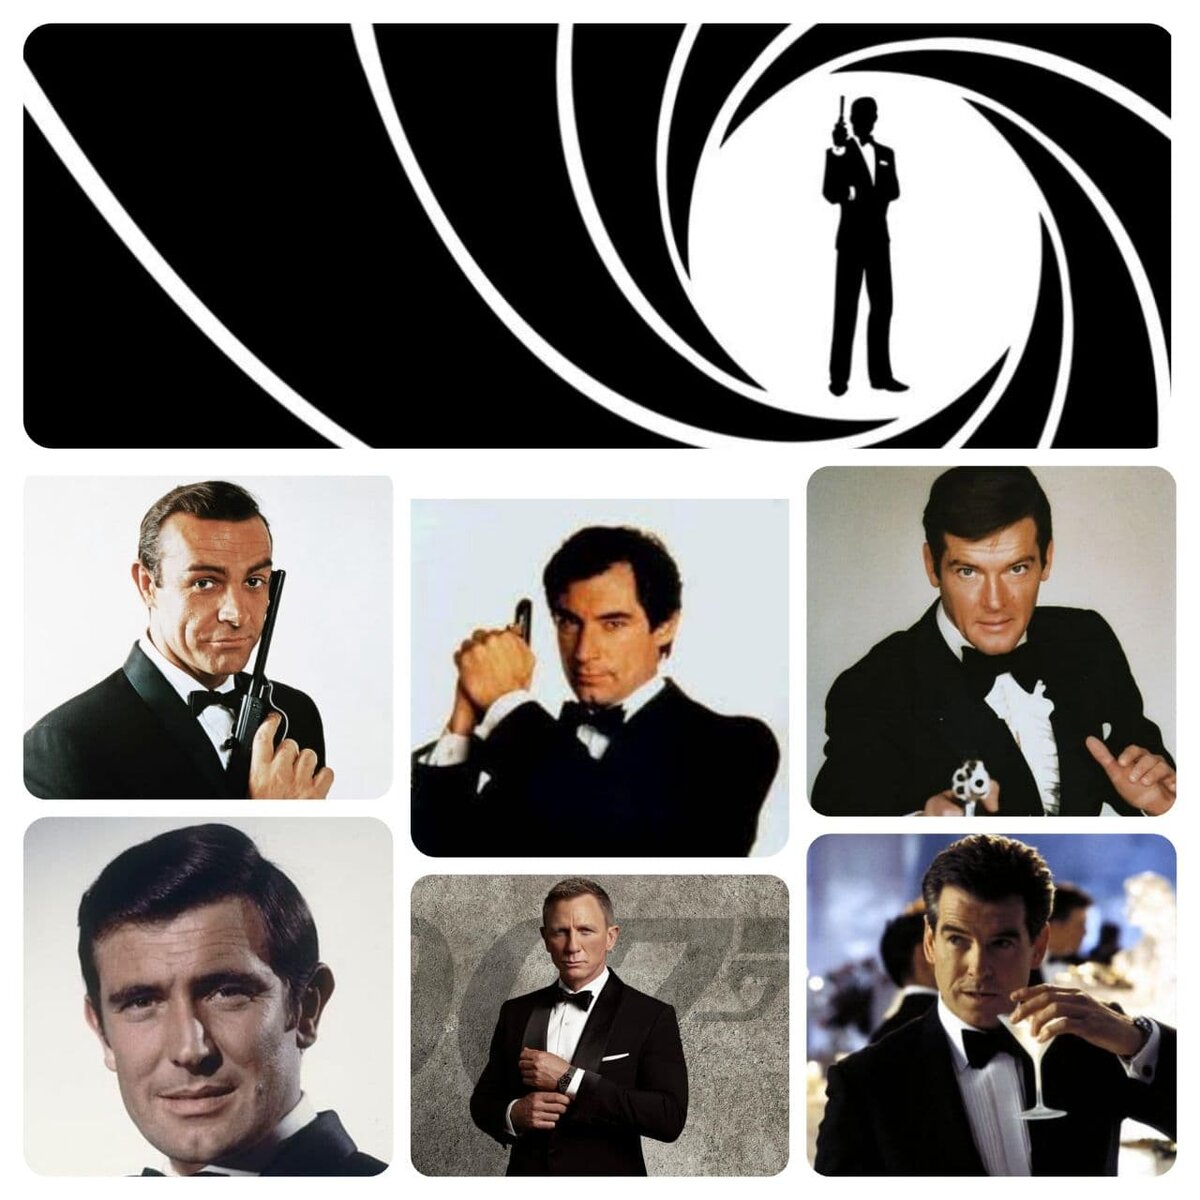 Агент 007 агент 0.7. Агент 007 и враг. Атрибуты агента 007.